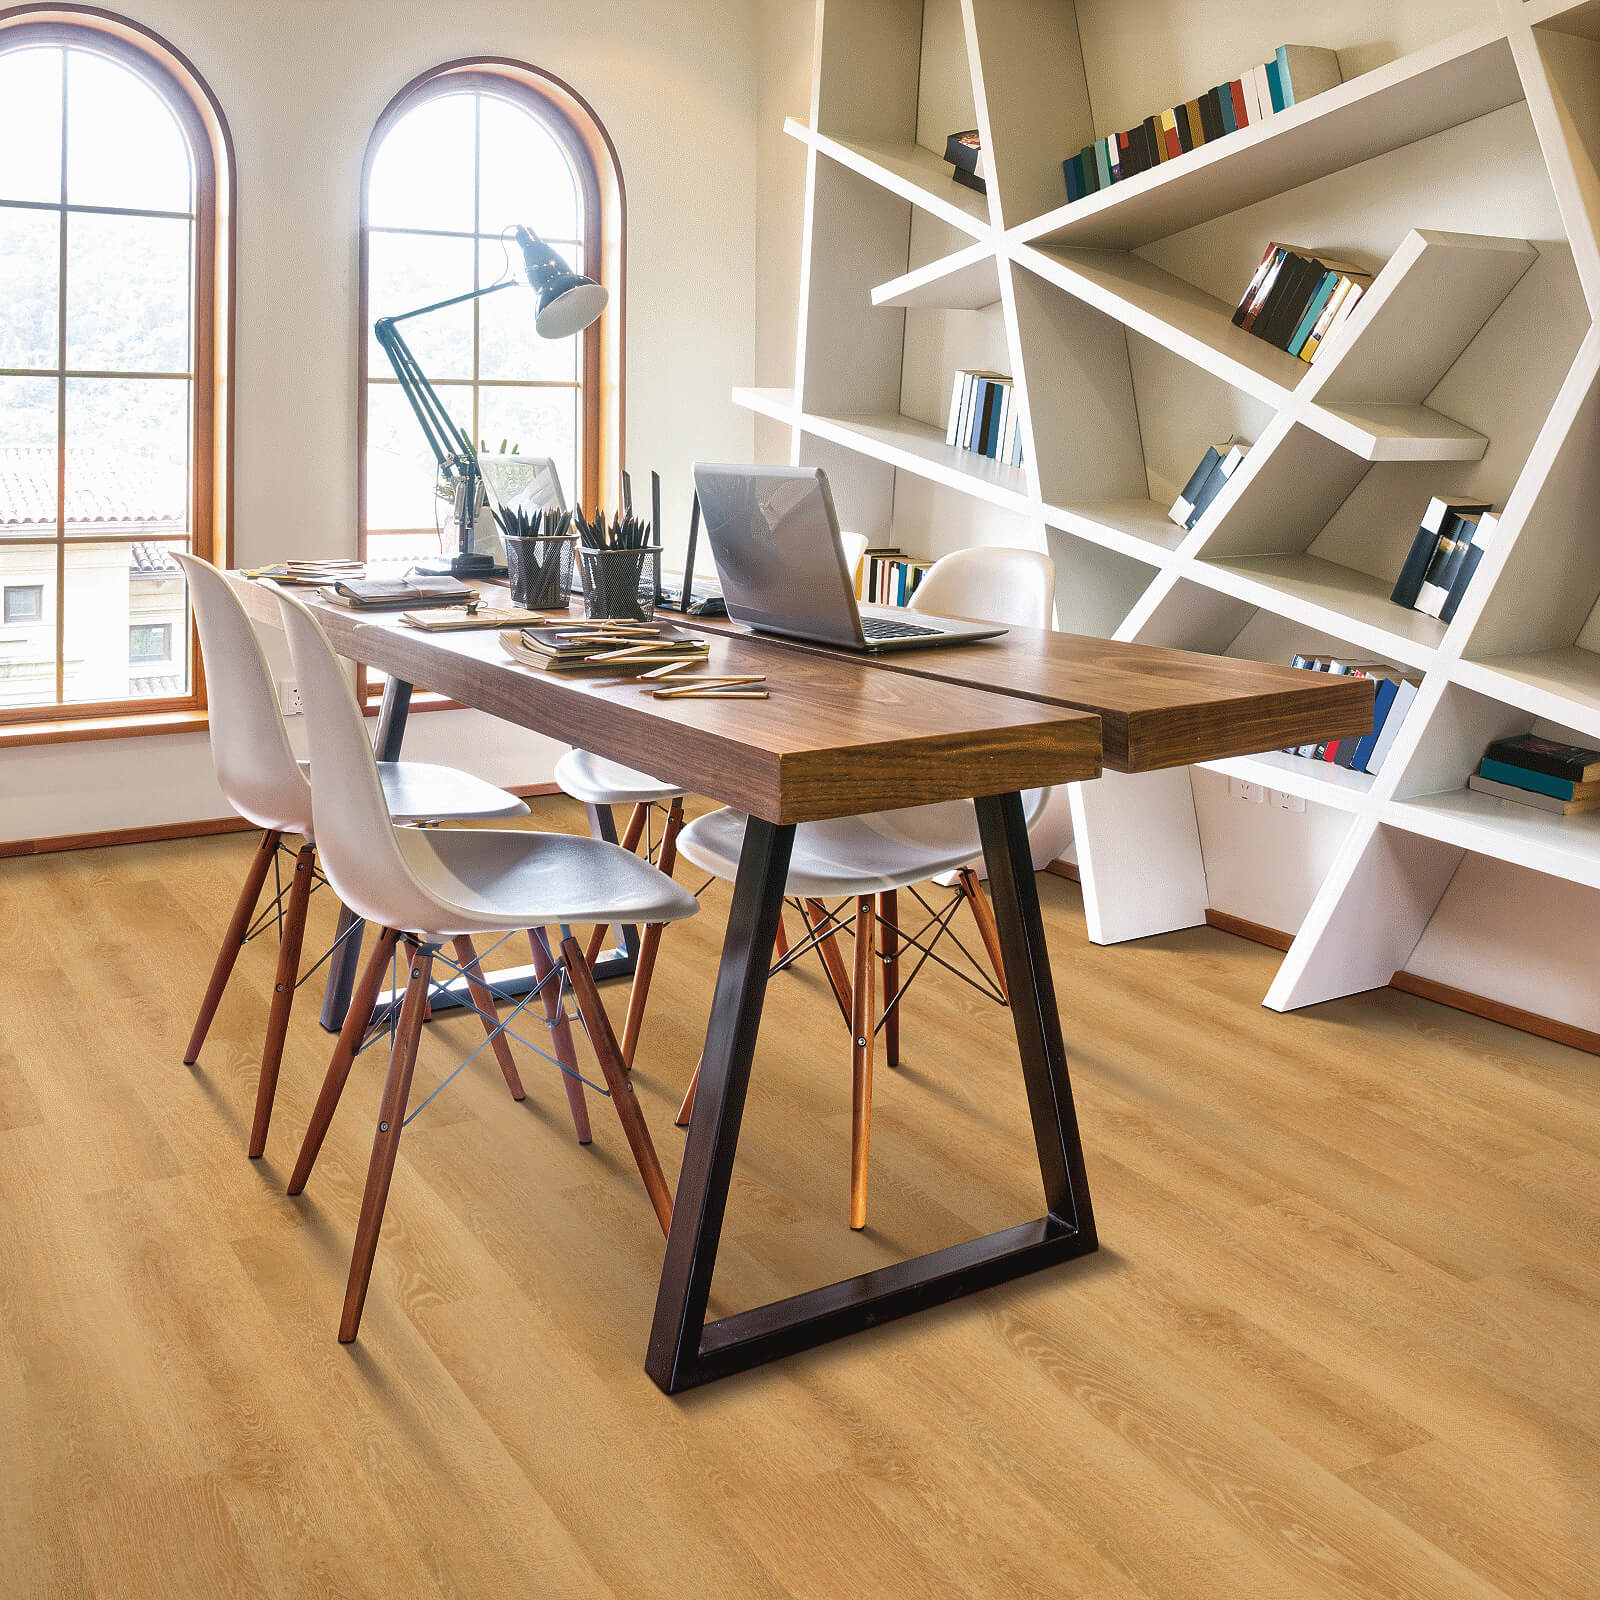 Vinyl flooring for study room | CarpetsPlus of Steamboat Springs